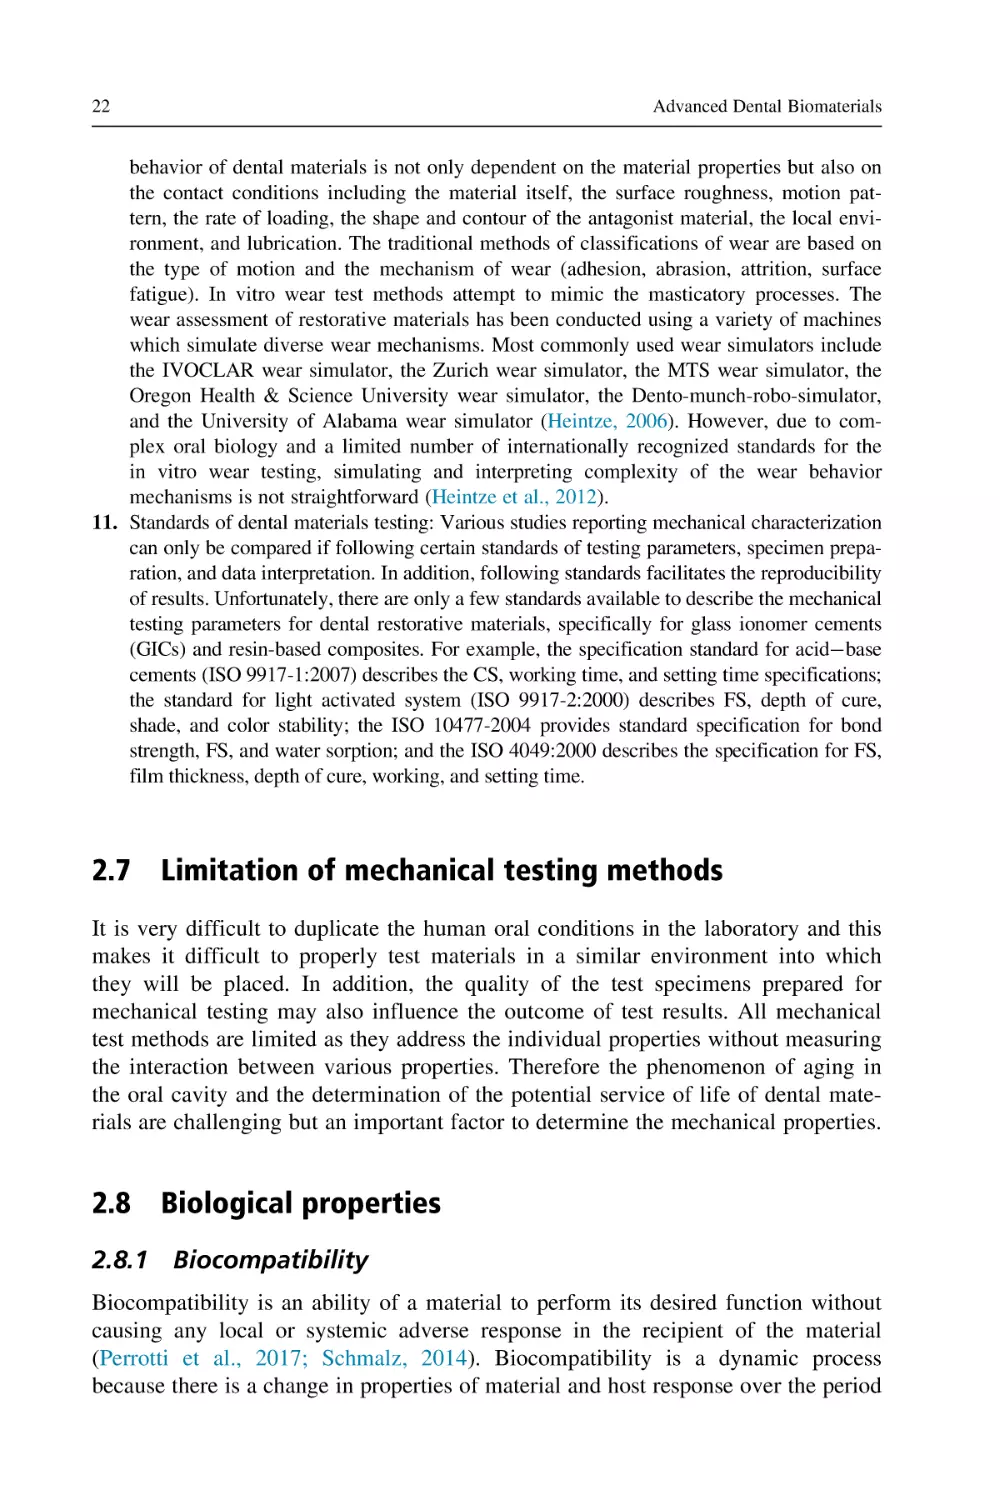 2.7 Limitation of mechanical testing methods
2.8 Biological properties
2.8.1 Biocompatibility